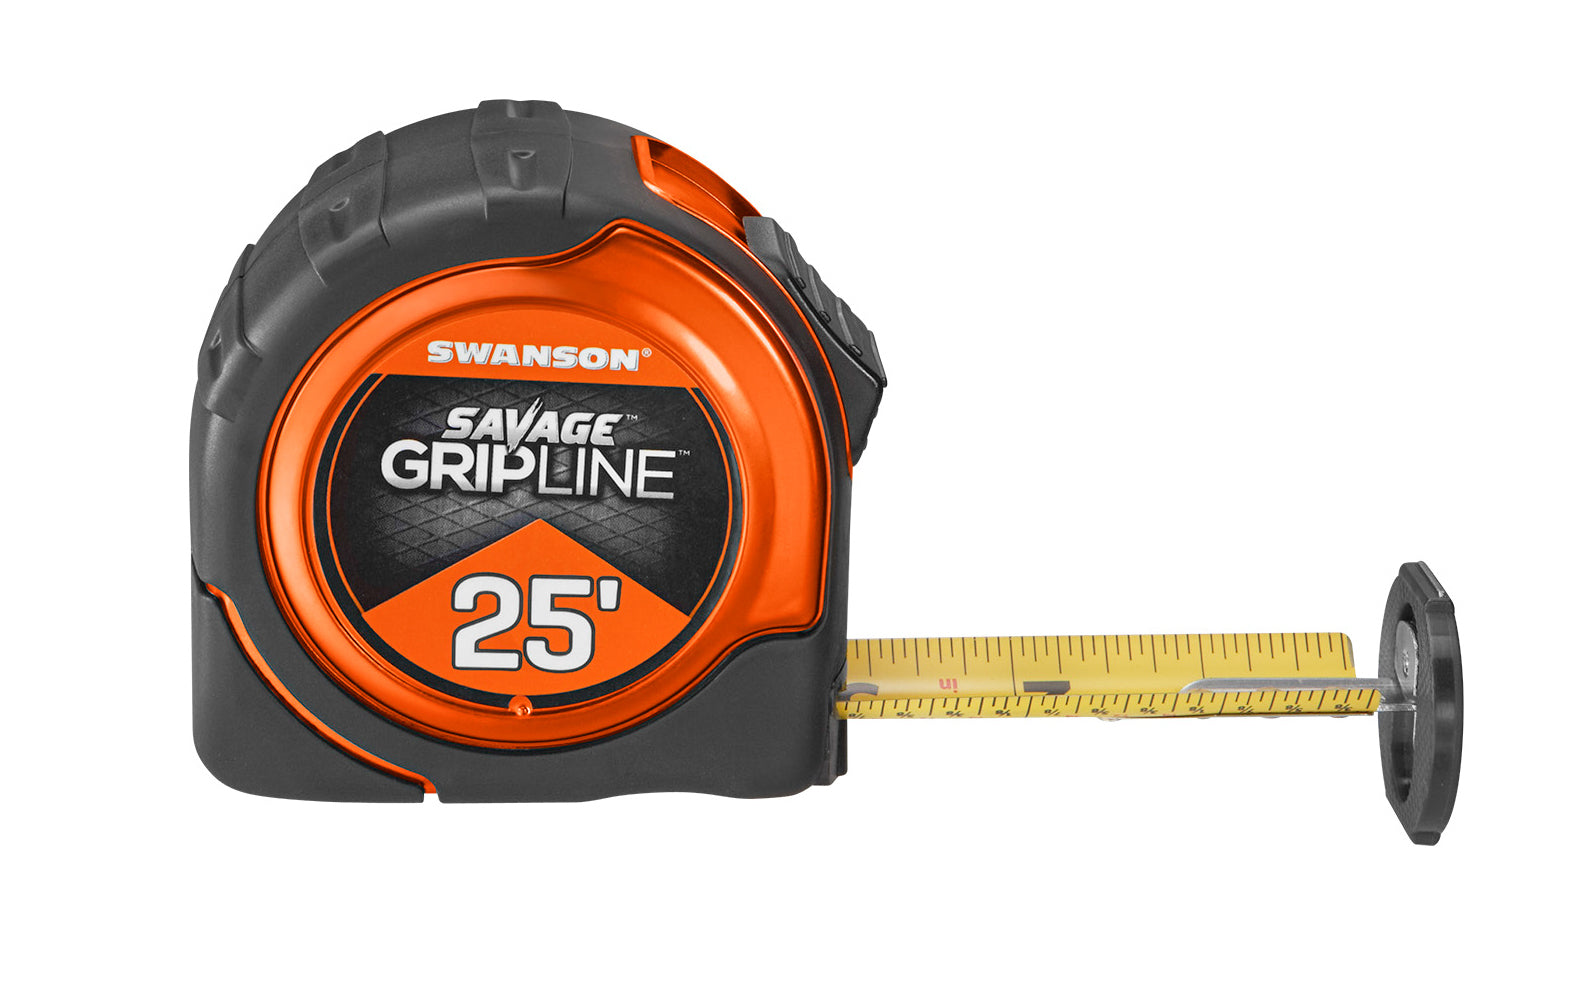 Swanson Savage Gripline 25' Tape Measure ~ Magnetic Tip - Model SVGL25M1 - Grips PVC, Conduit & Pipe up to 2